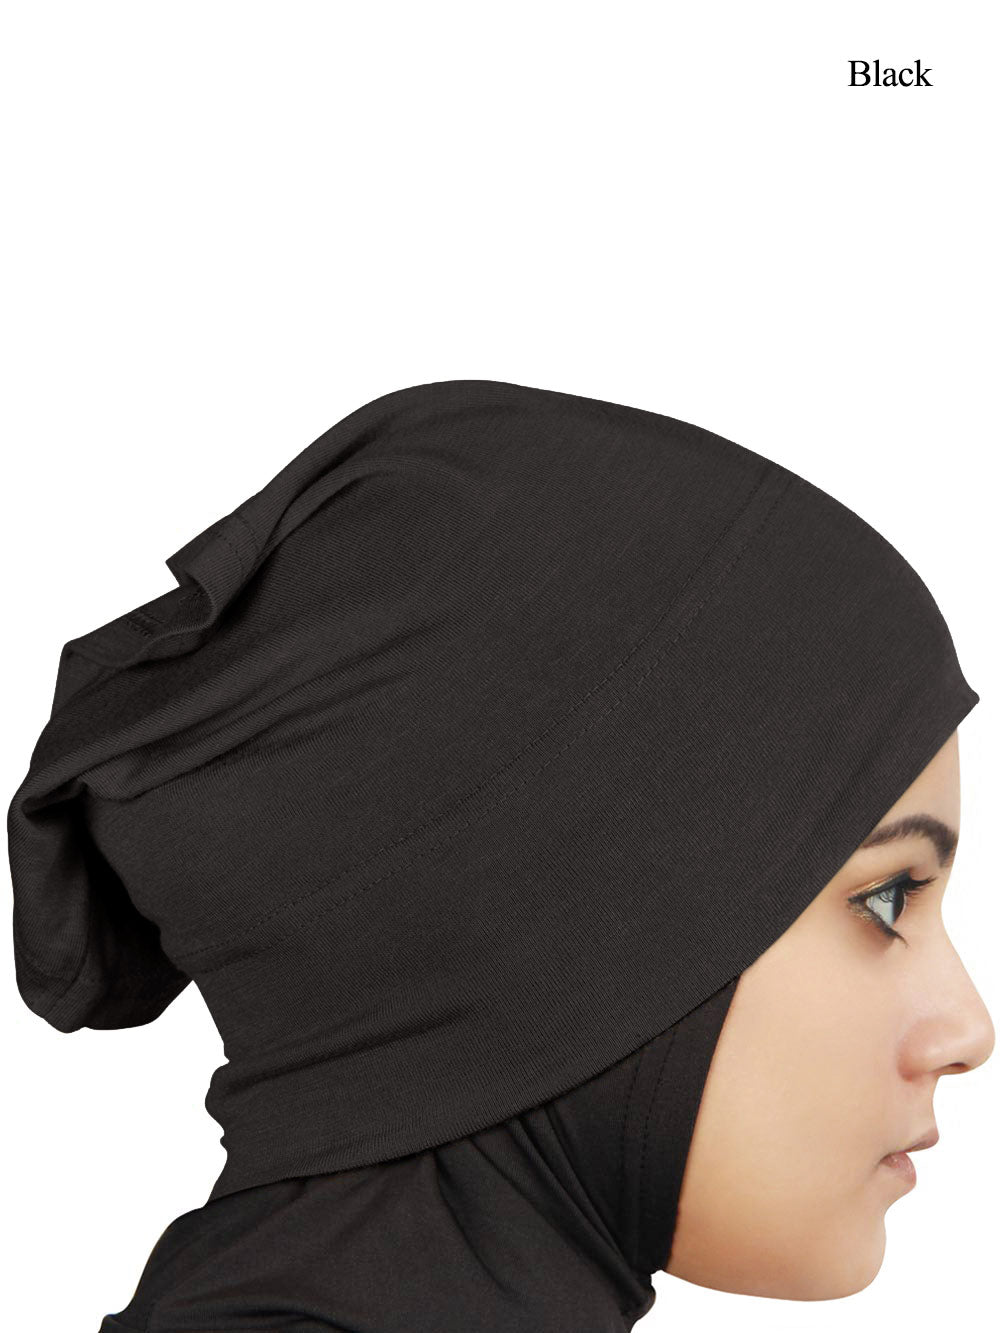 Two Piece Al-Amira Black Viscose Jersey Hijab